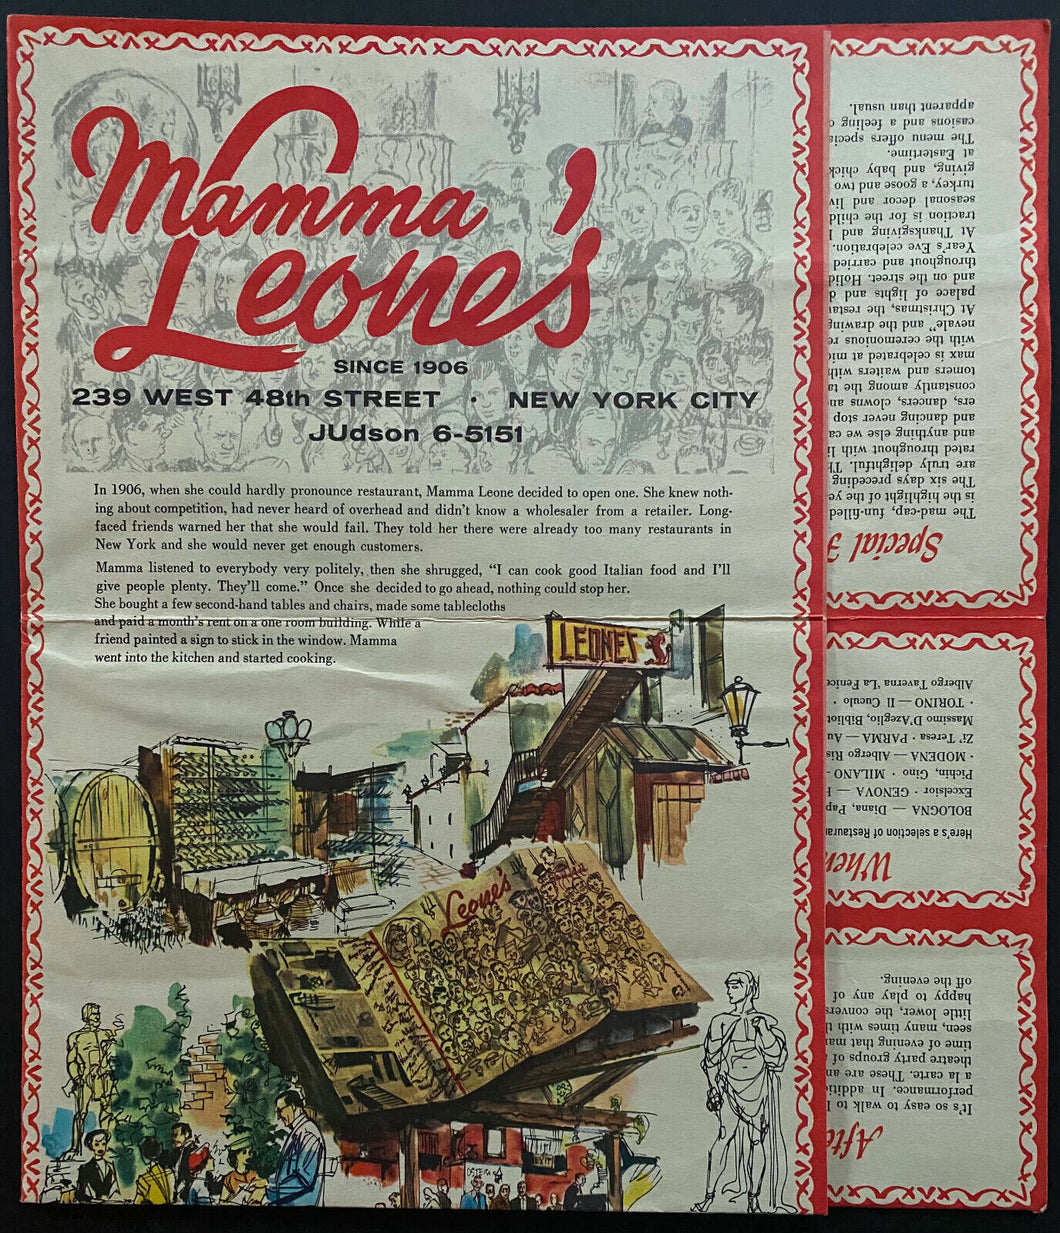 1969 New York City Restaurant Mamma Leone's Foldout Menu West 48 Street